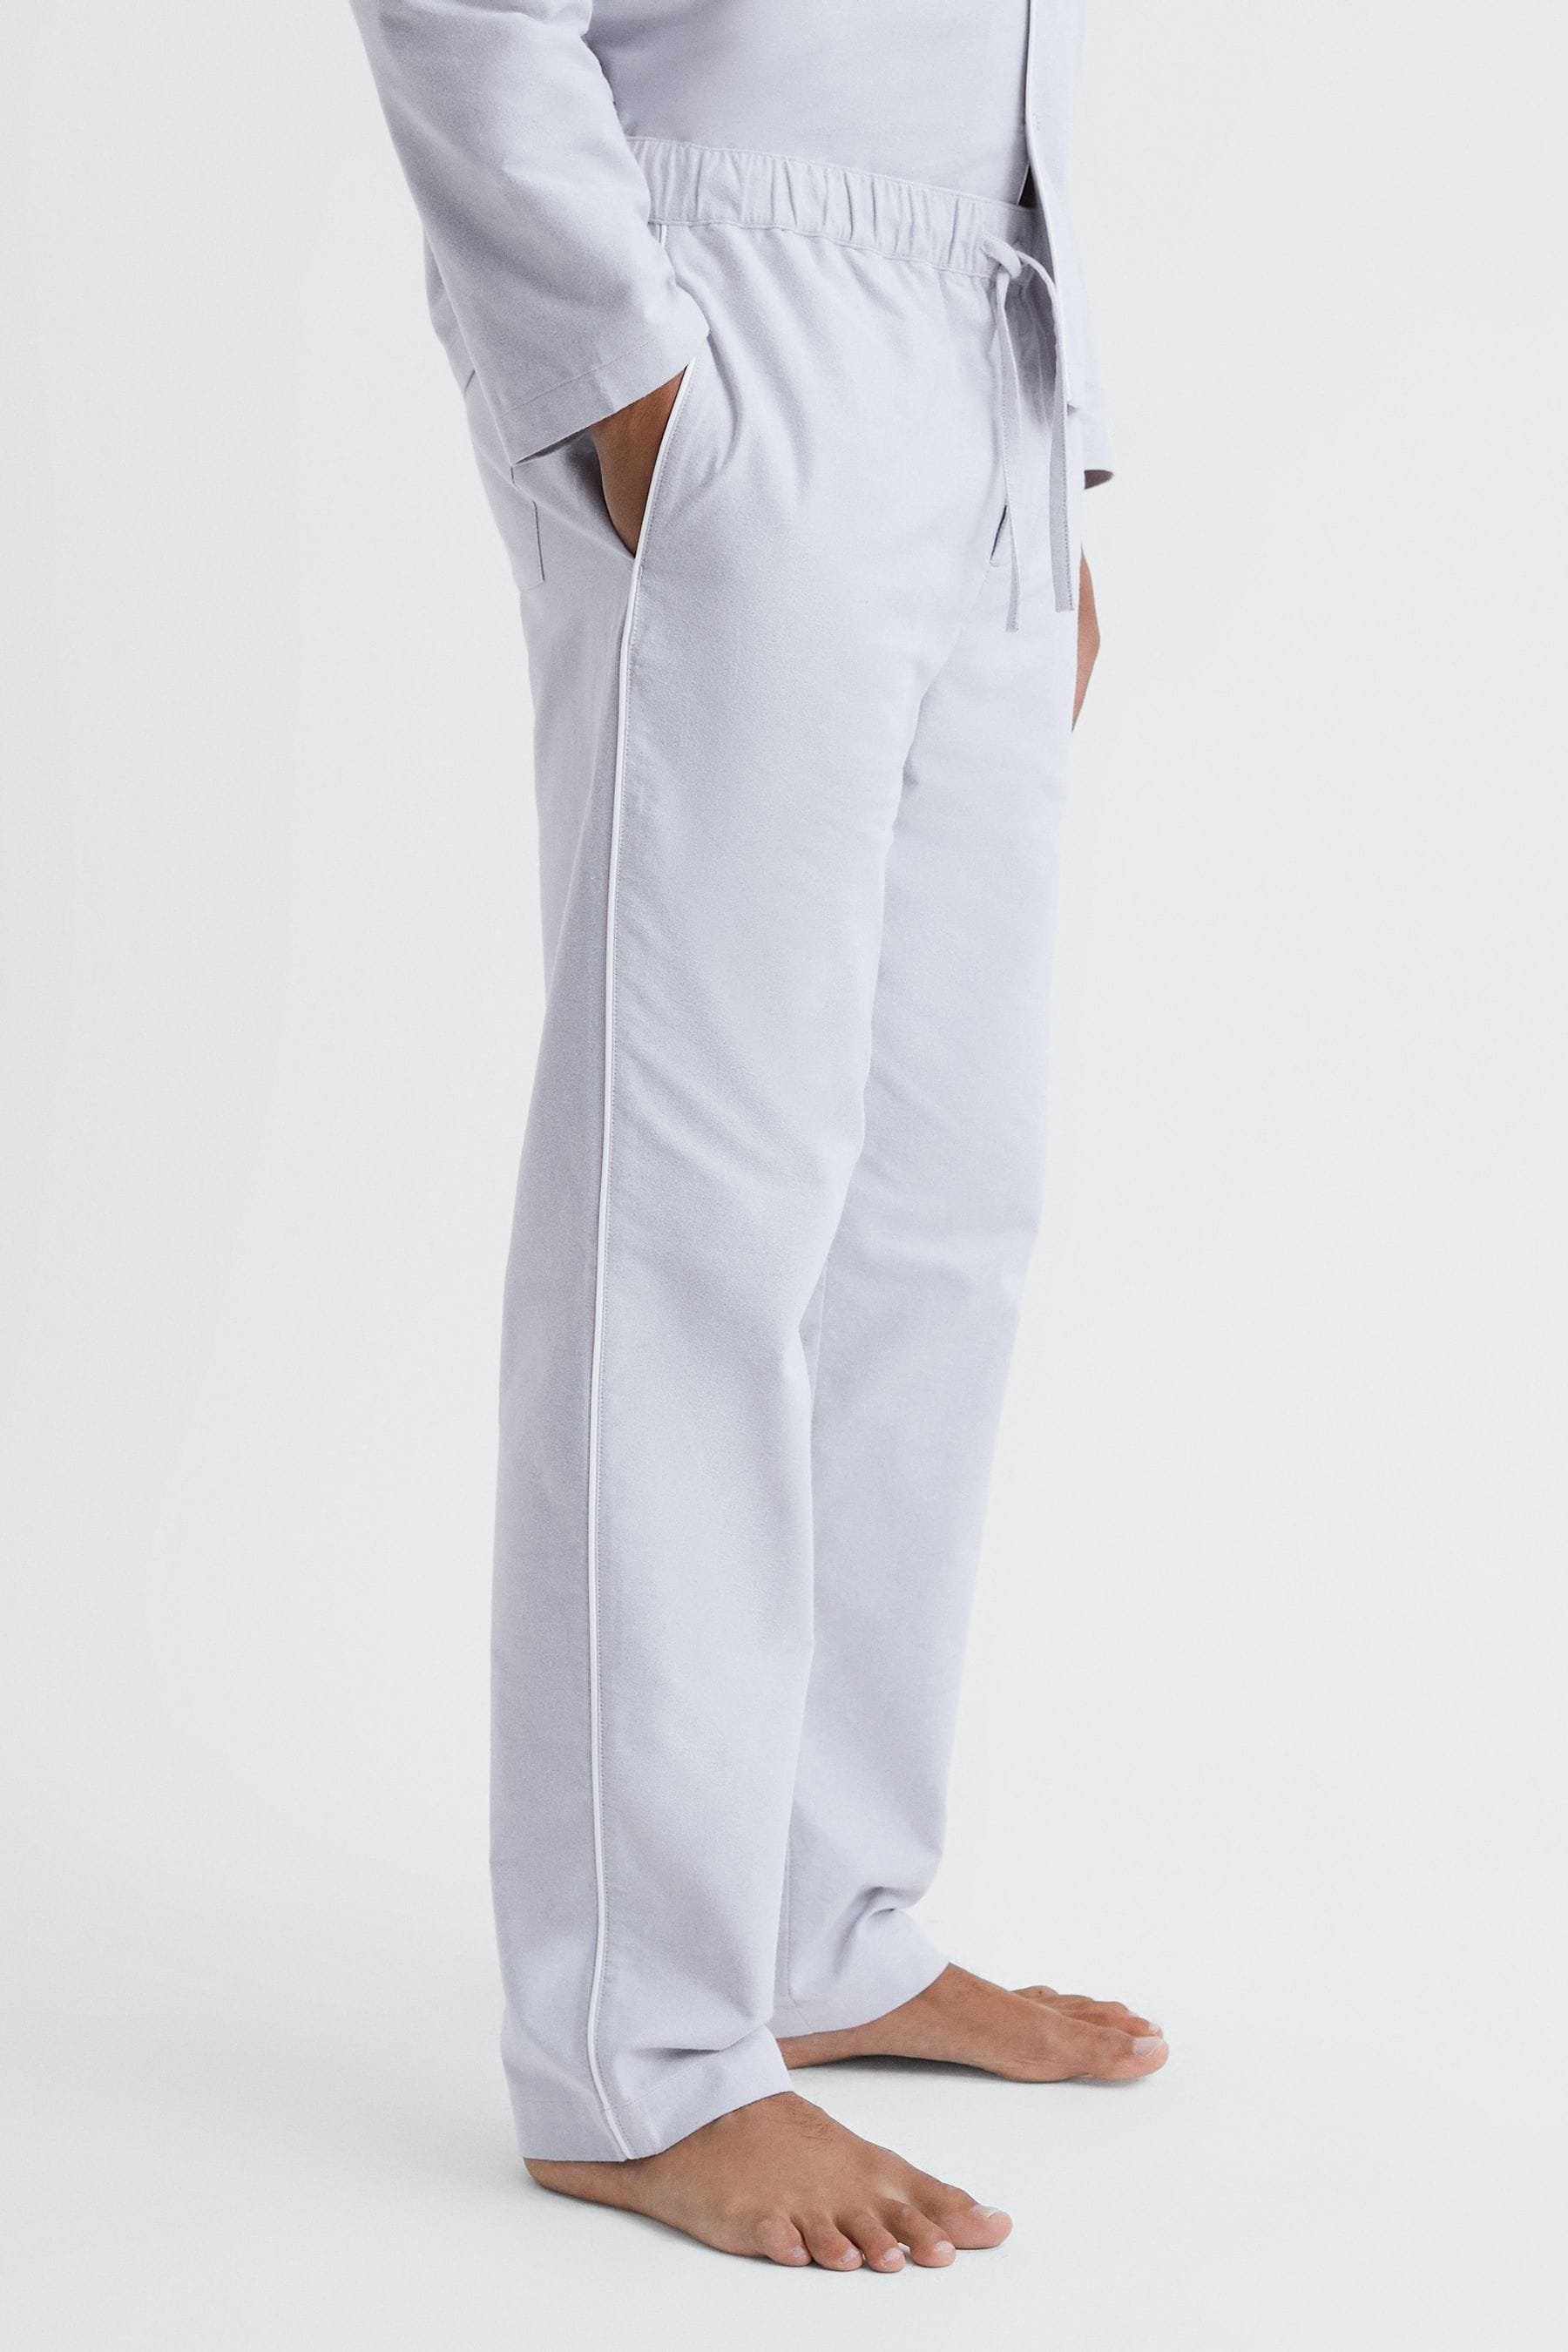 Reiss Farley - Ice Grey Cotton Drawstring Pyjama Bottoms, L